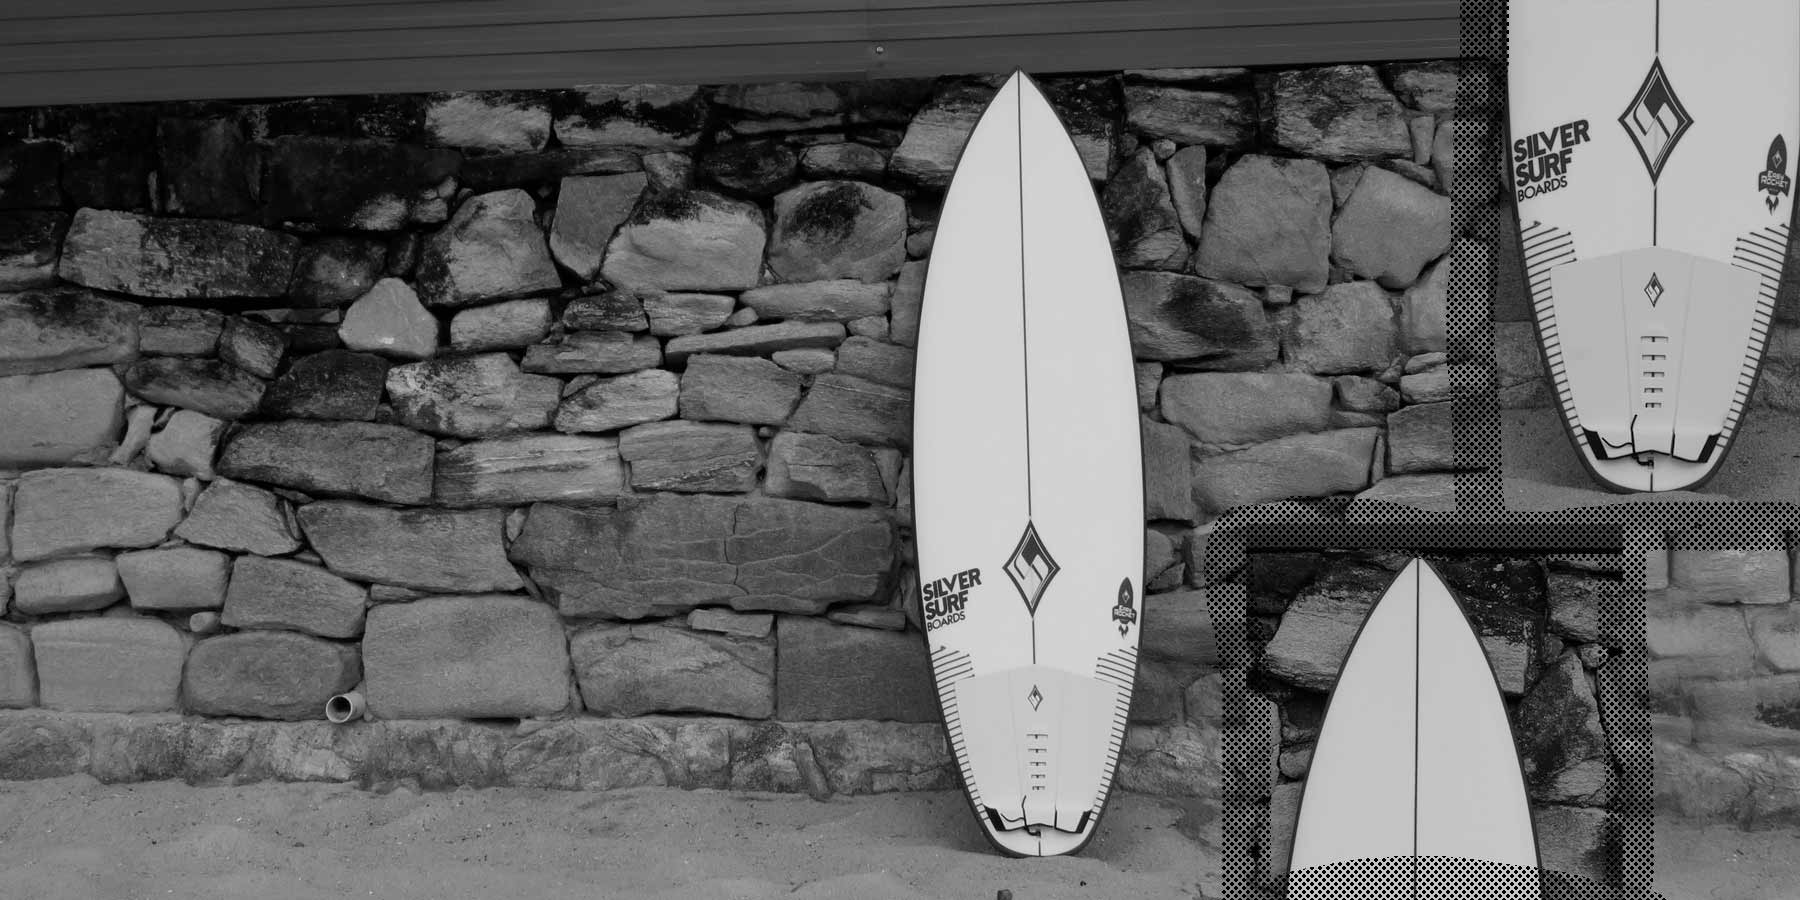 Easy Rocket Silver Surf Surfboards